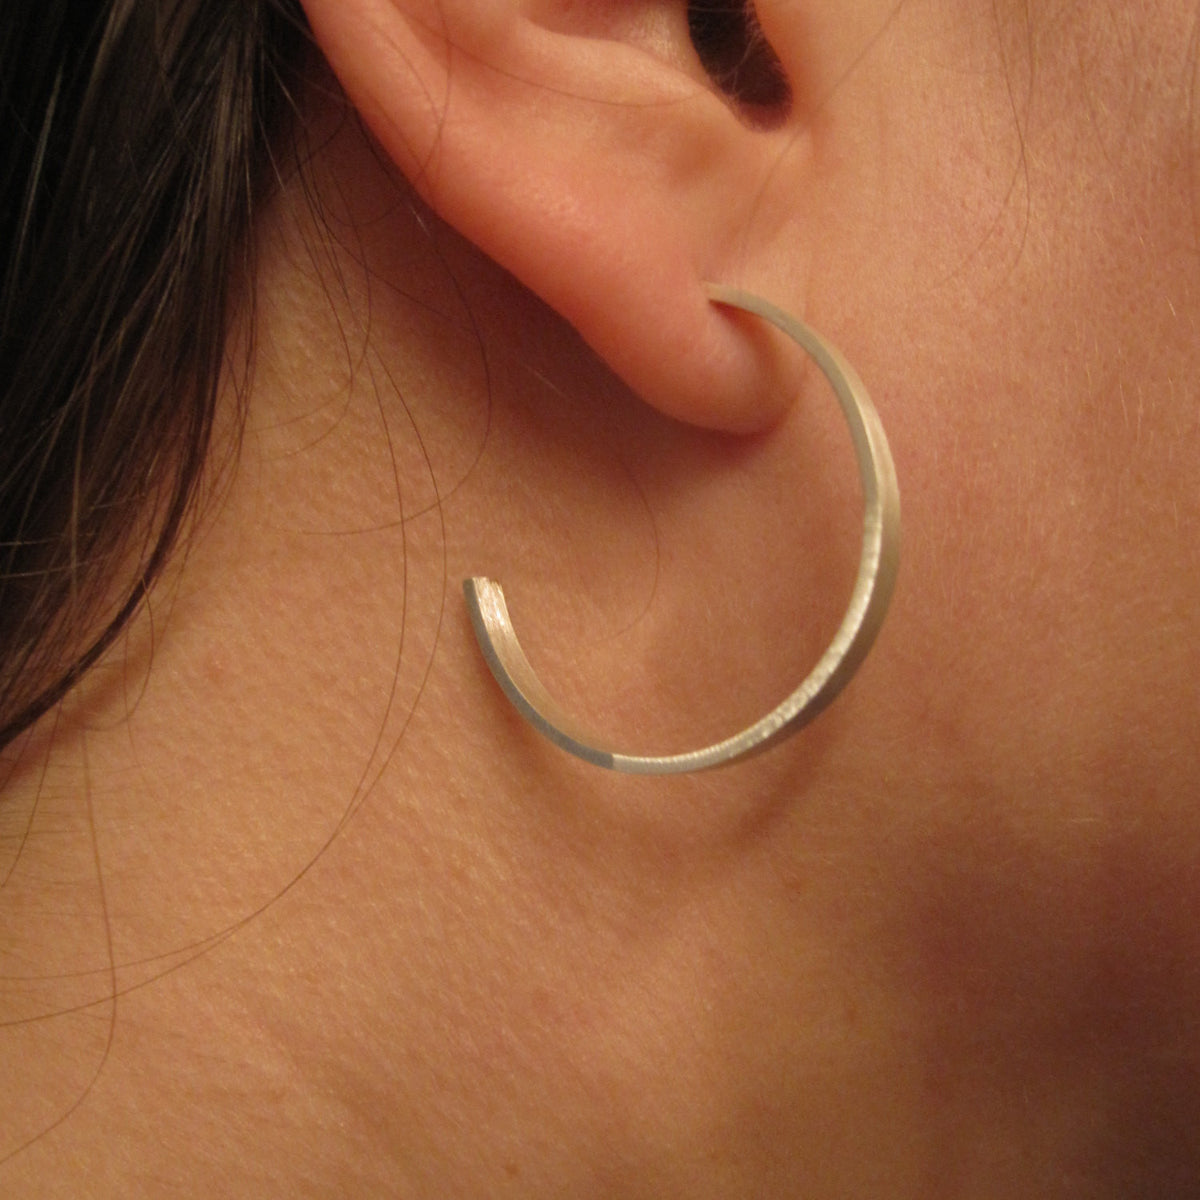 Elegant, Stylish Hand-Made Rectangle Circle Hoop Earrings in Sterling Silver - 0188 - Virginia Wynne Designs